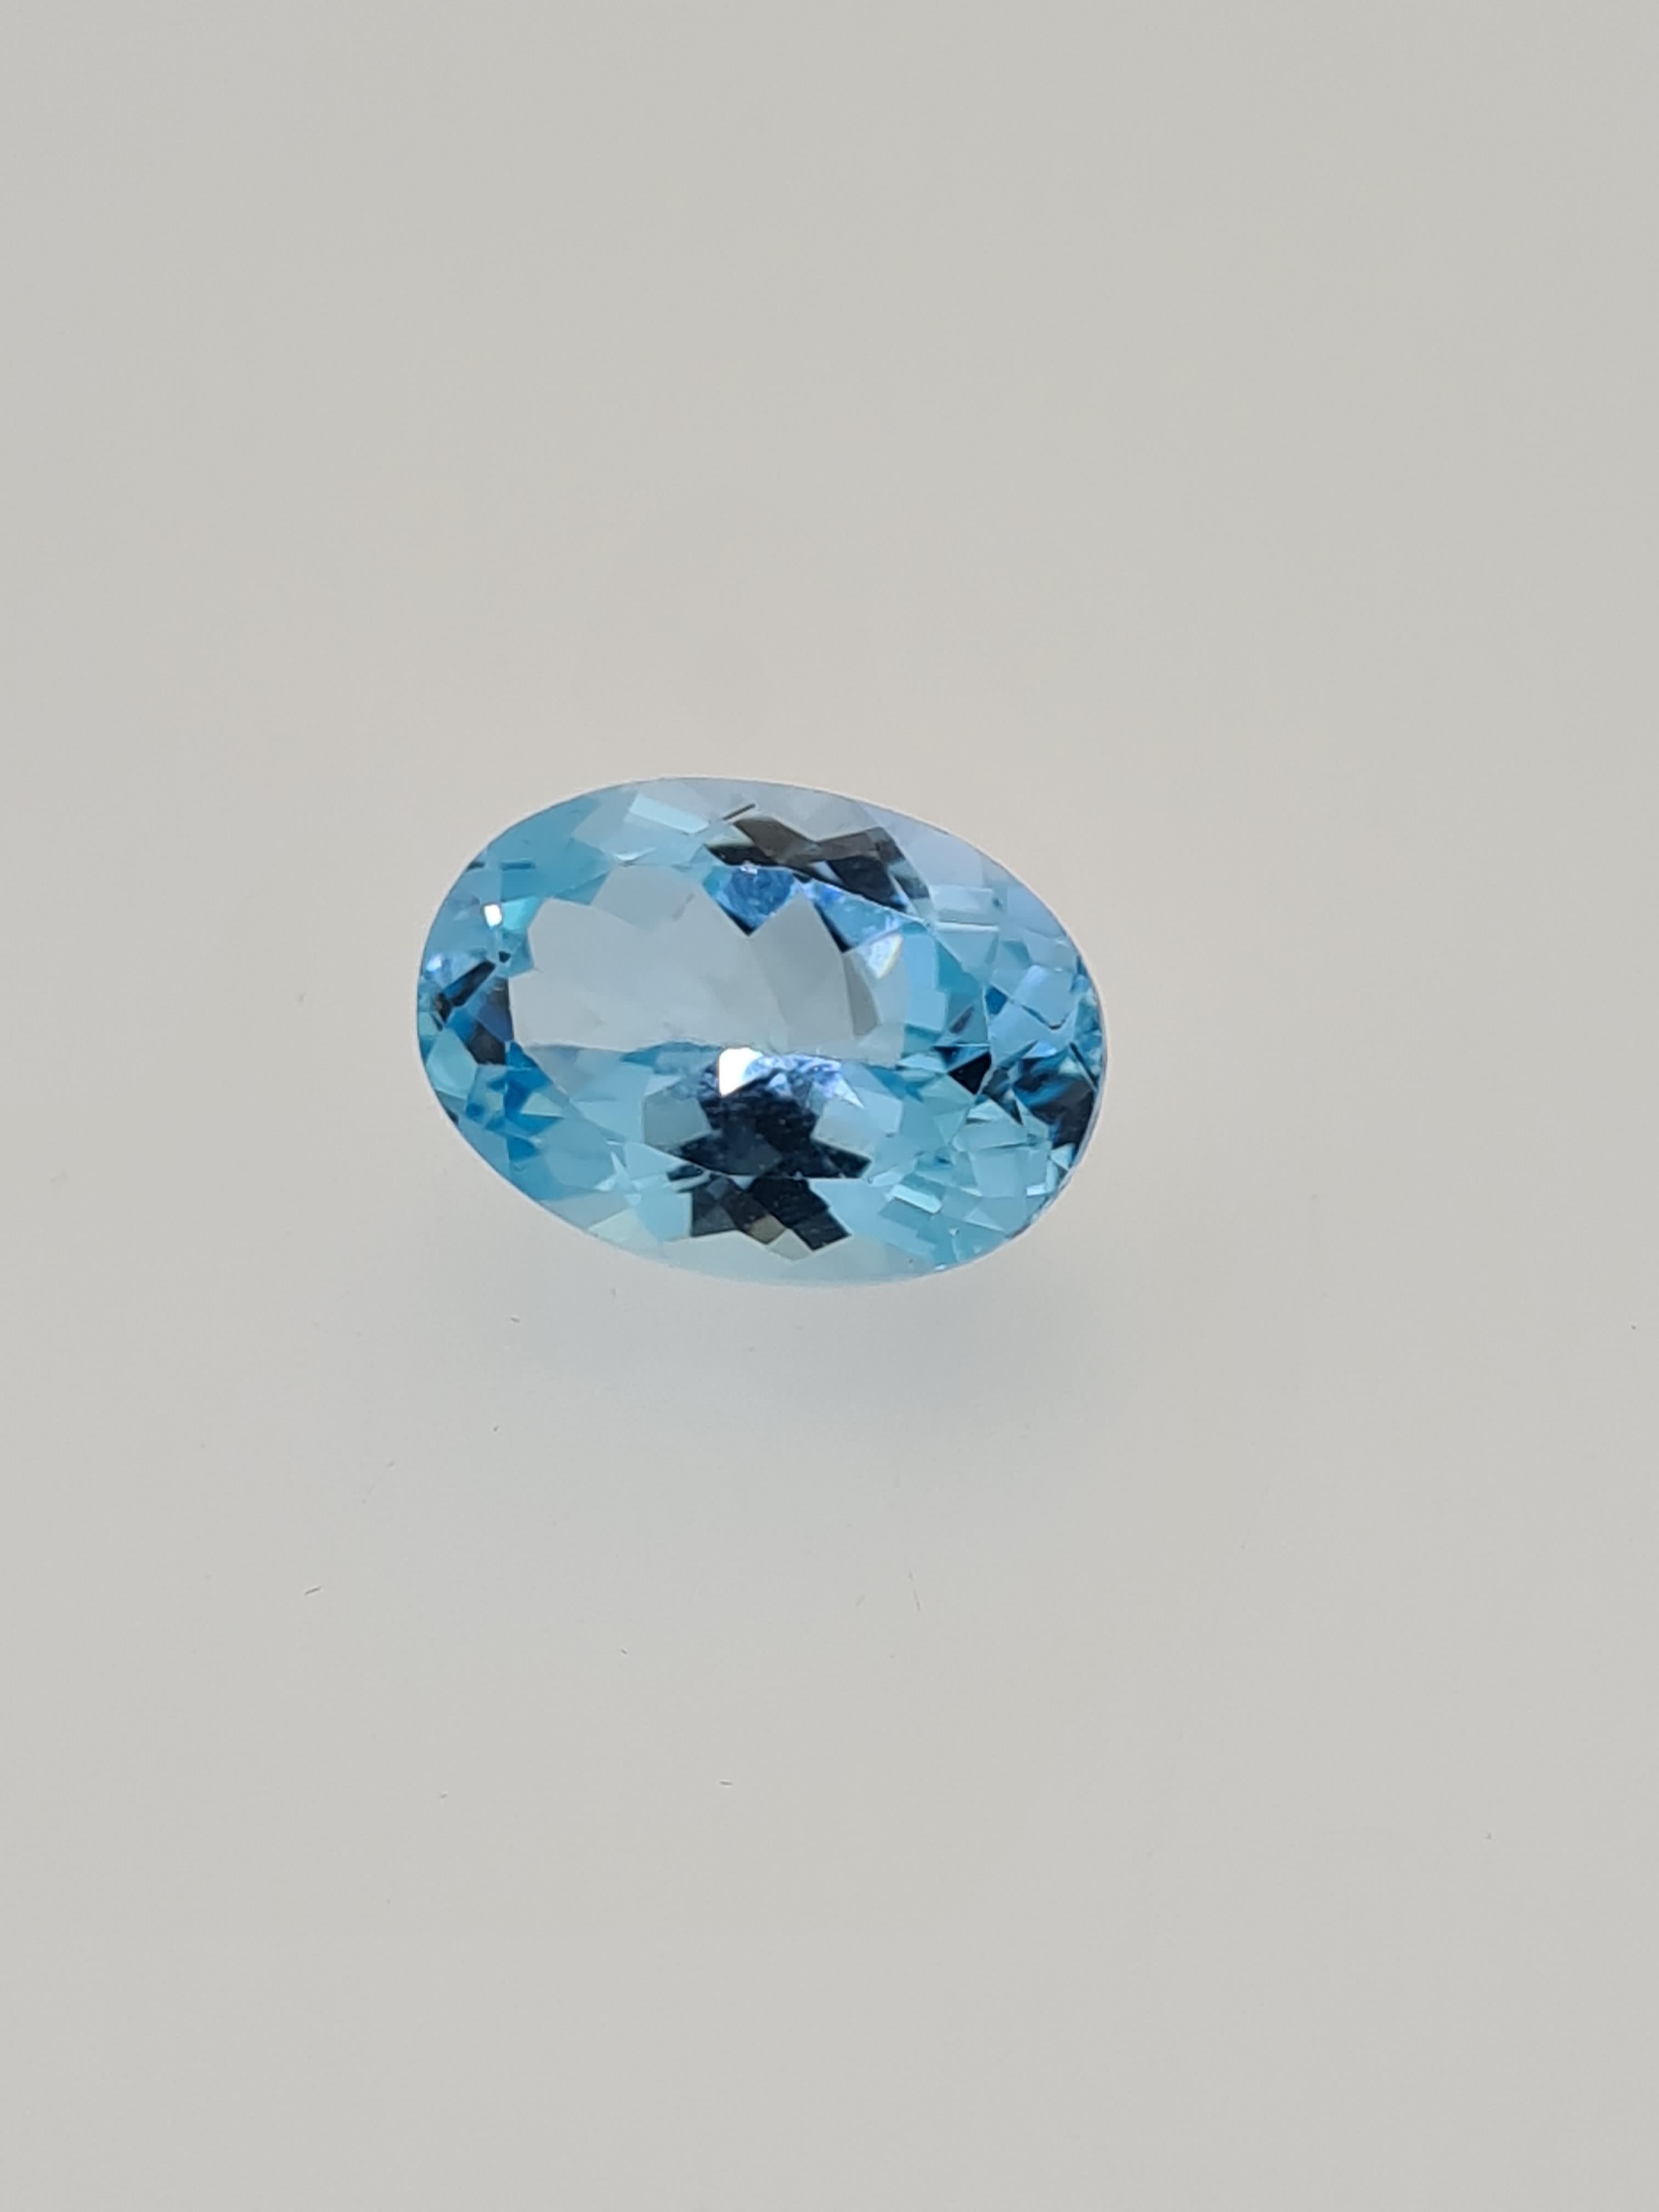 Blue topaz oval cut gemstone - Image 4 of 4